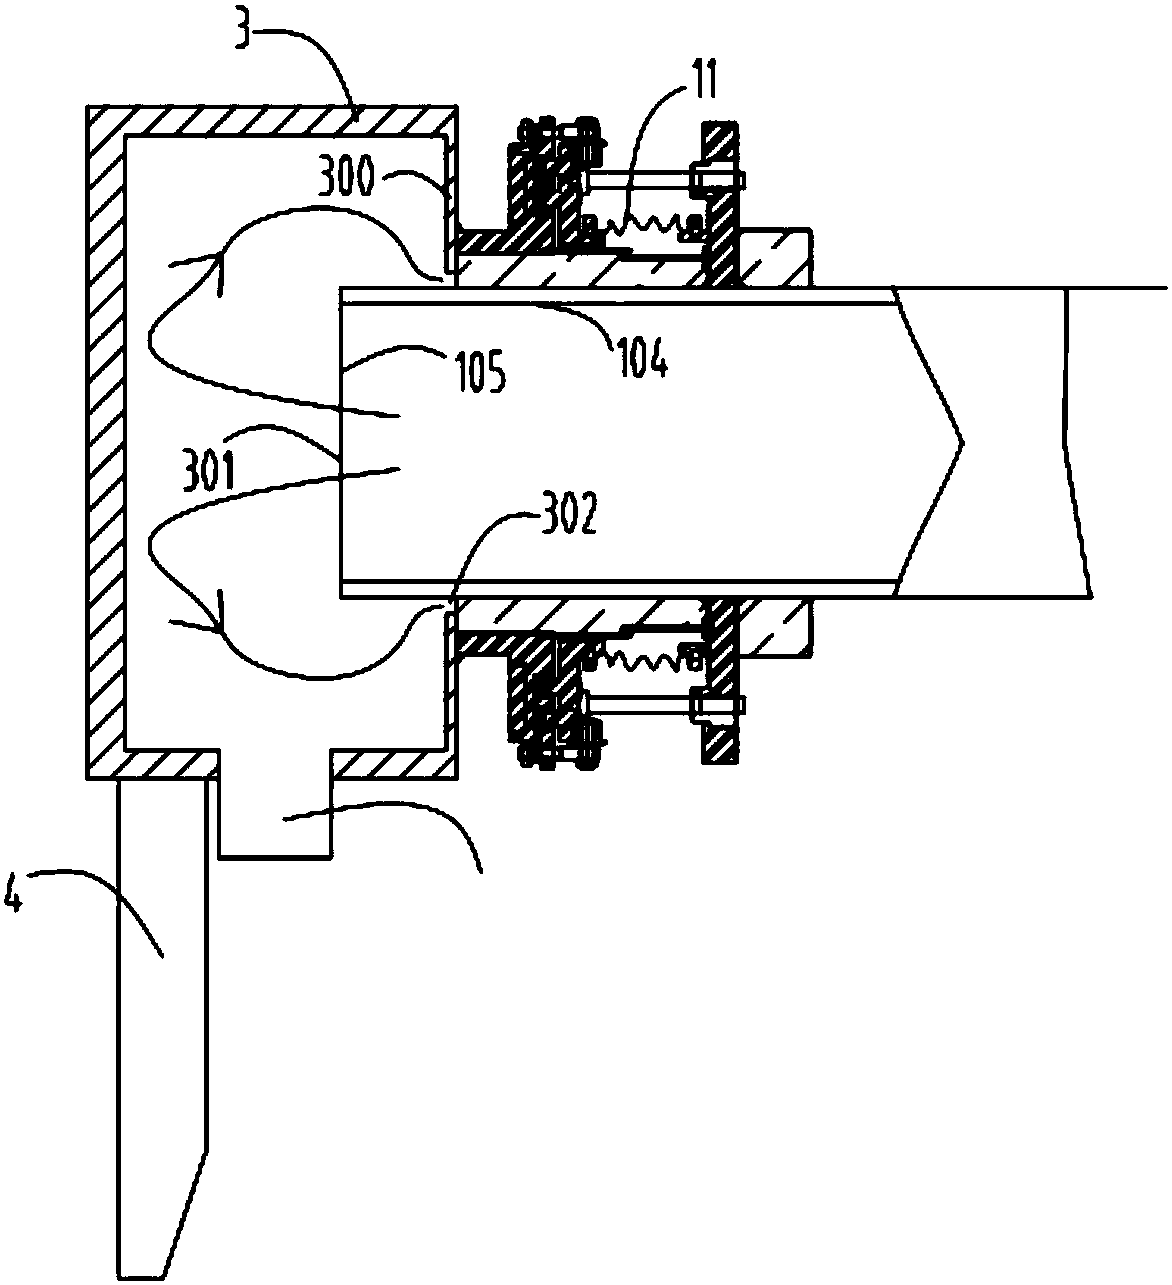 A rotary pyrolysis furnace